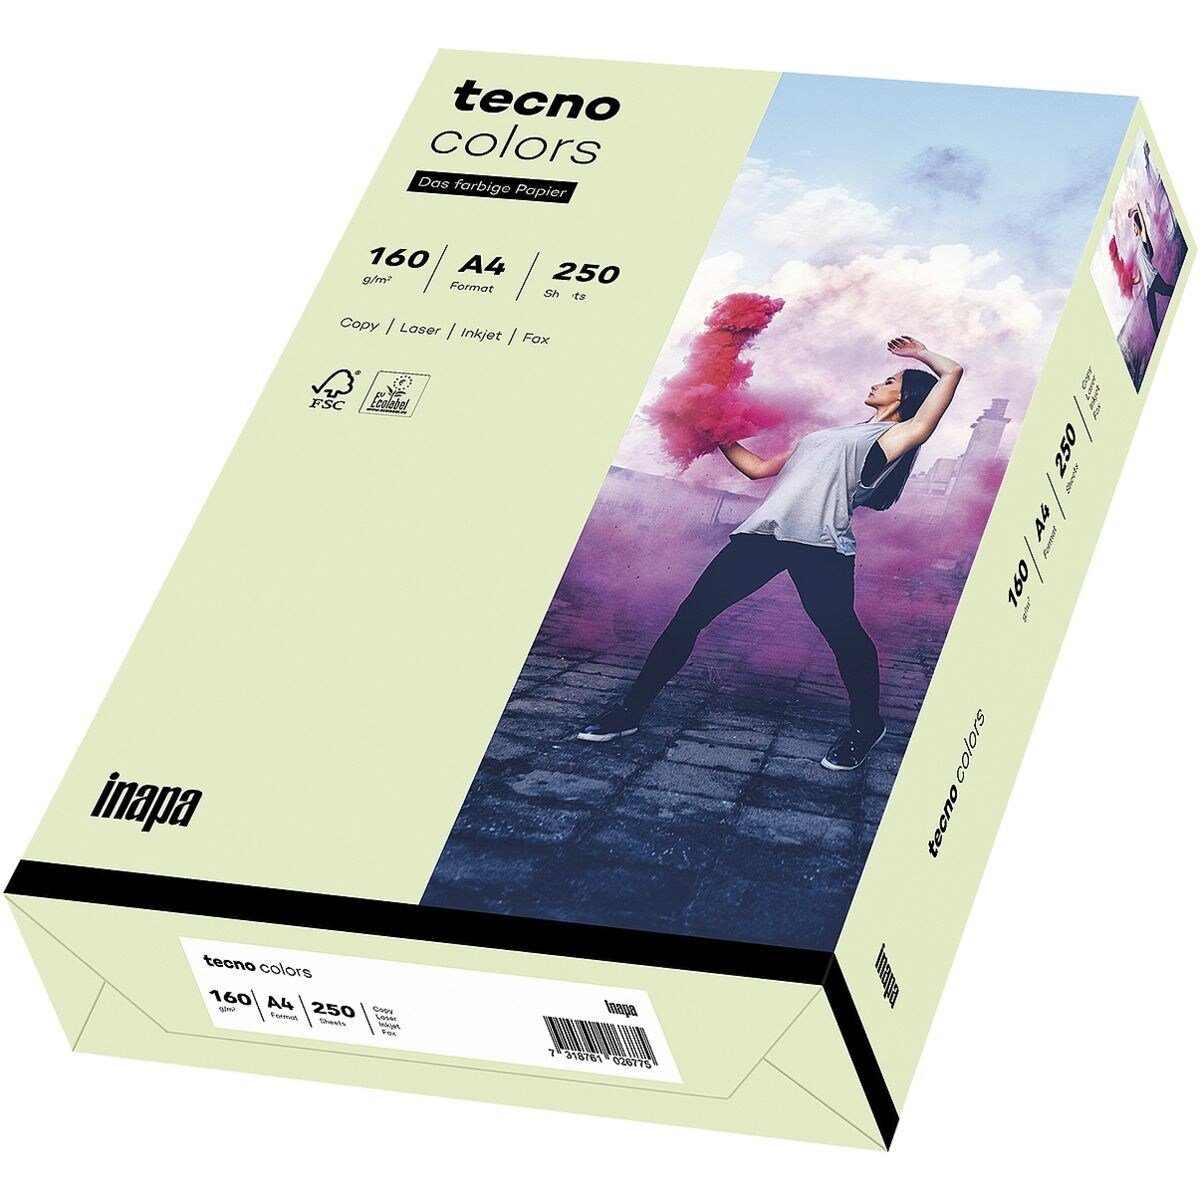 Inapa tecno Drucker- und Kopierpapier Rainbow / tecno Colors, Pastellfarben, Format DIN A4, 160 g/m², 250 Blatt hellgrün